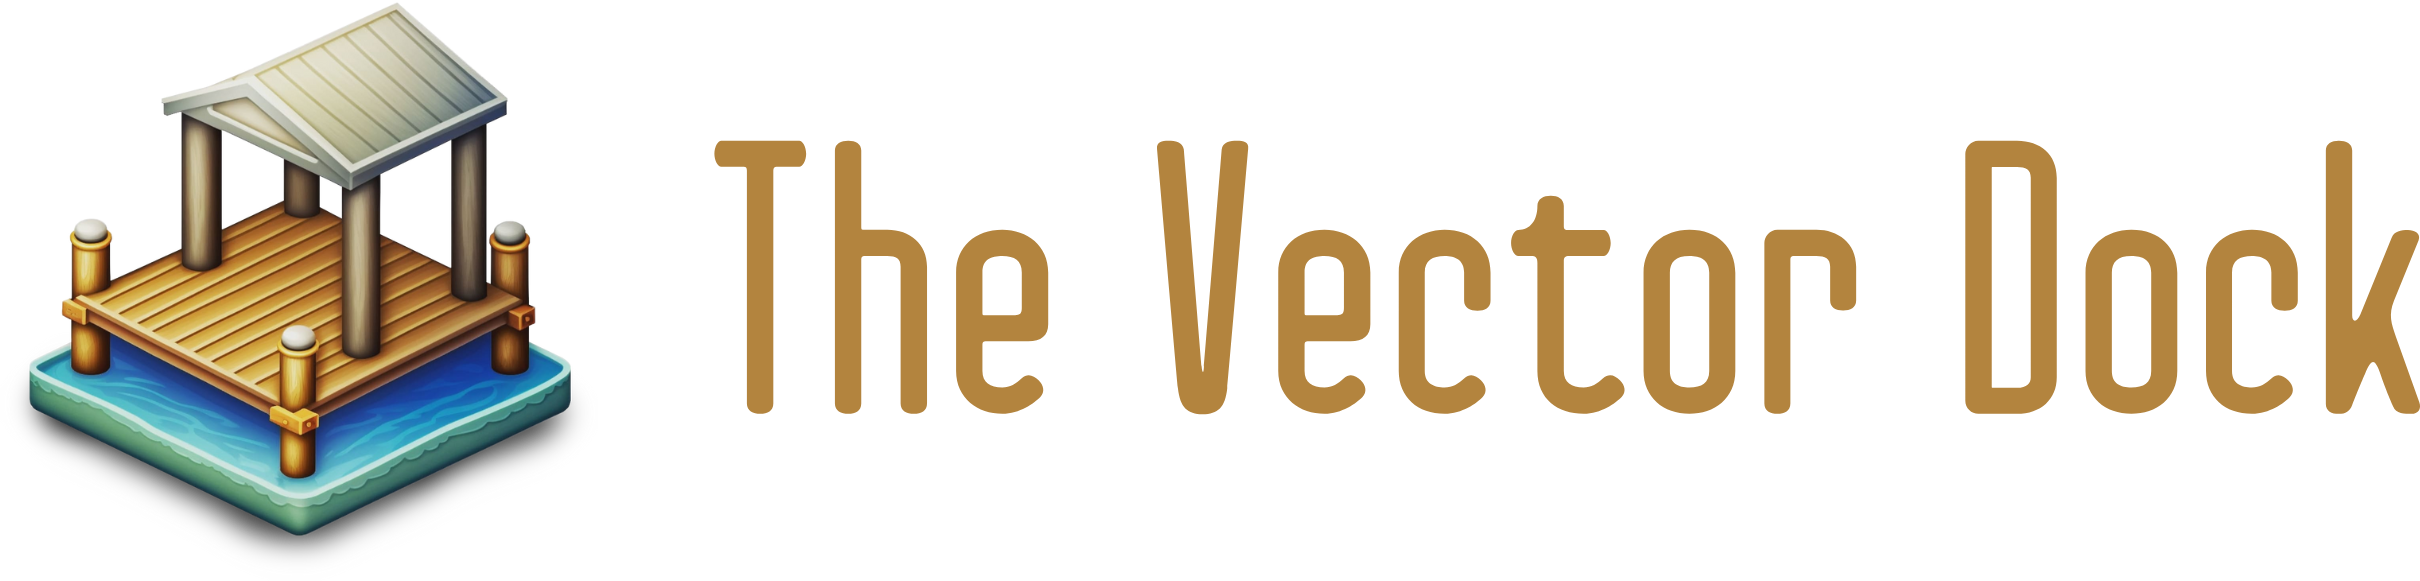 vector dock logo : svg designs